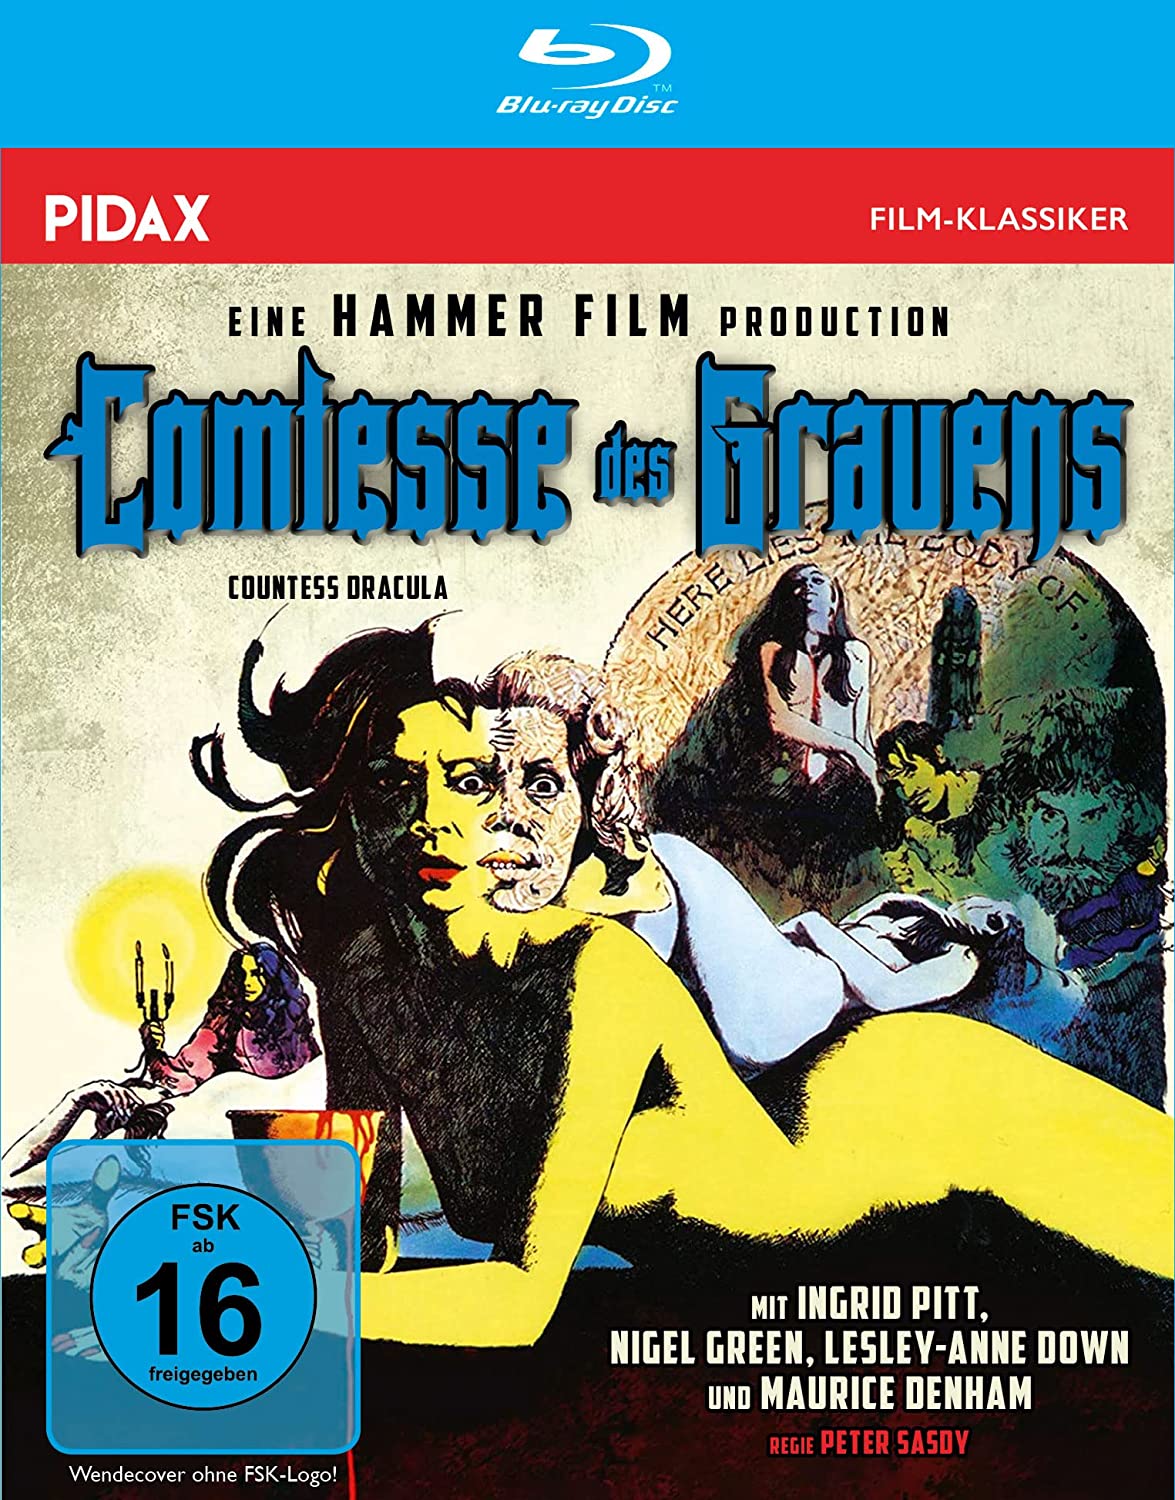 Comtesse des Grauens (Countess Dracula) / Kultiger Horrorfilm